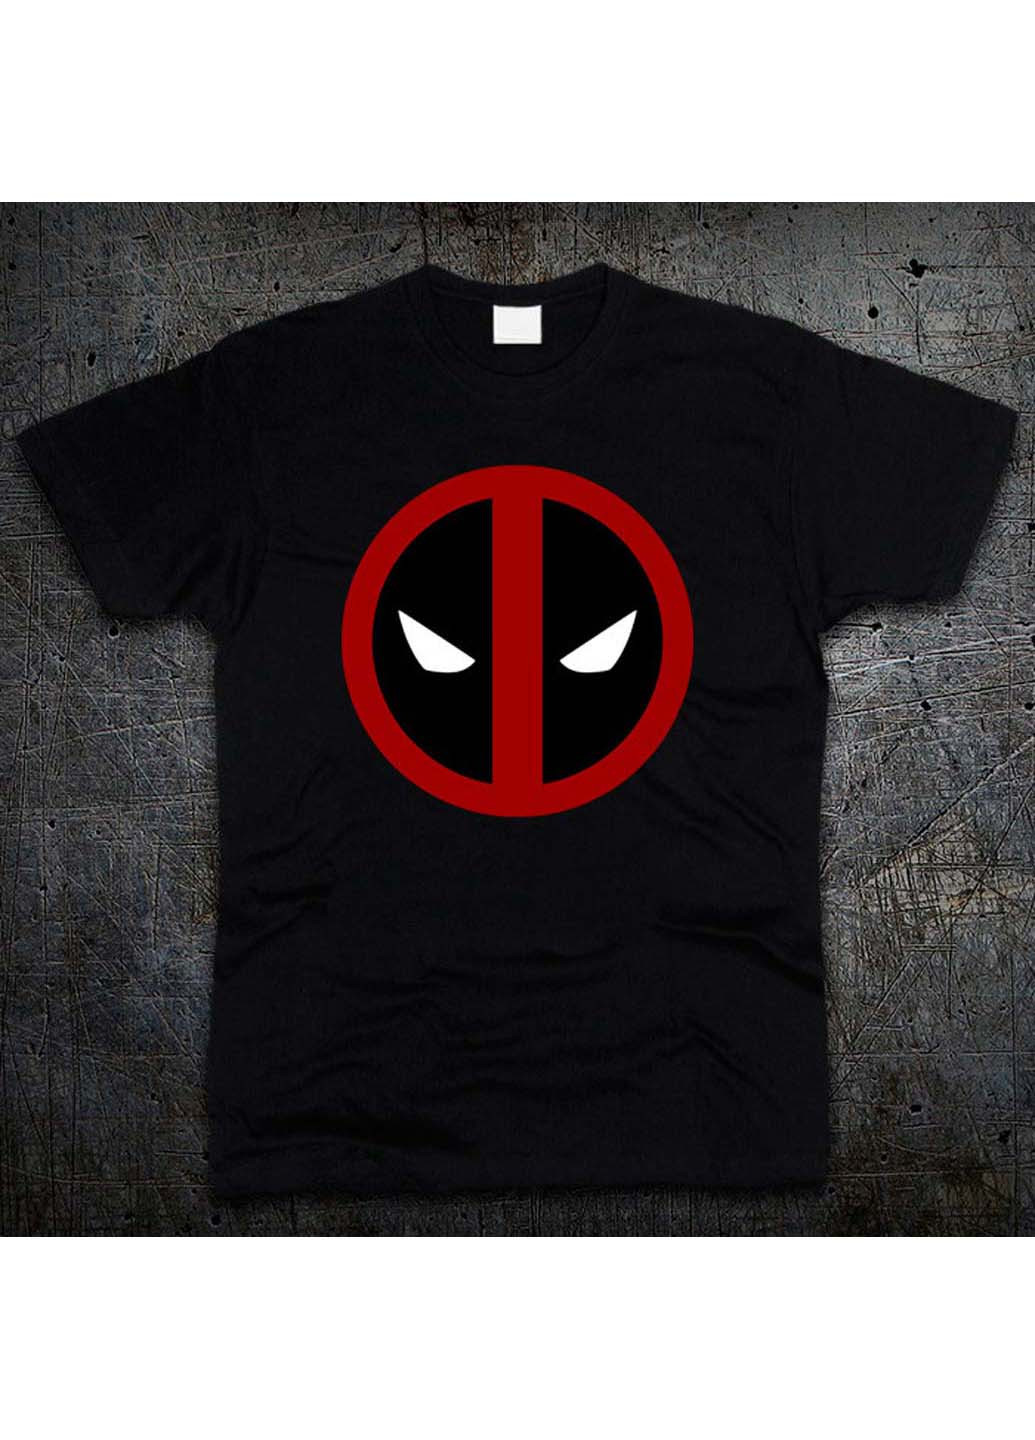 Черная футболка Fruit of the Loom Логотип Дэдпул Марвел Deadpool Marvel